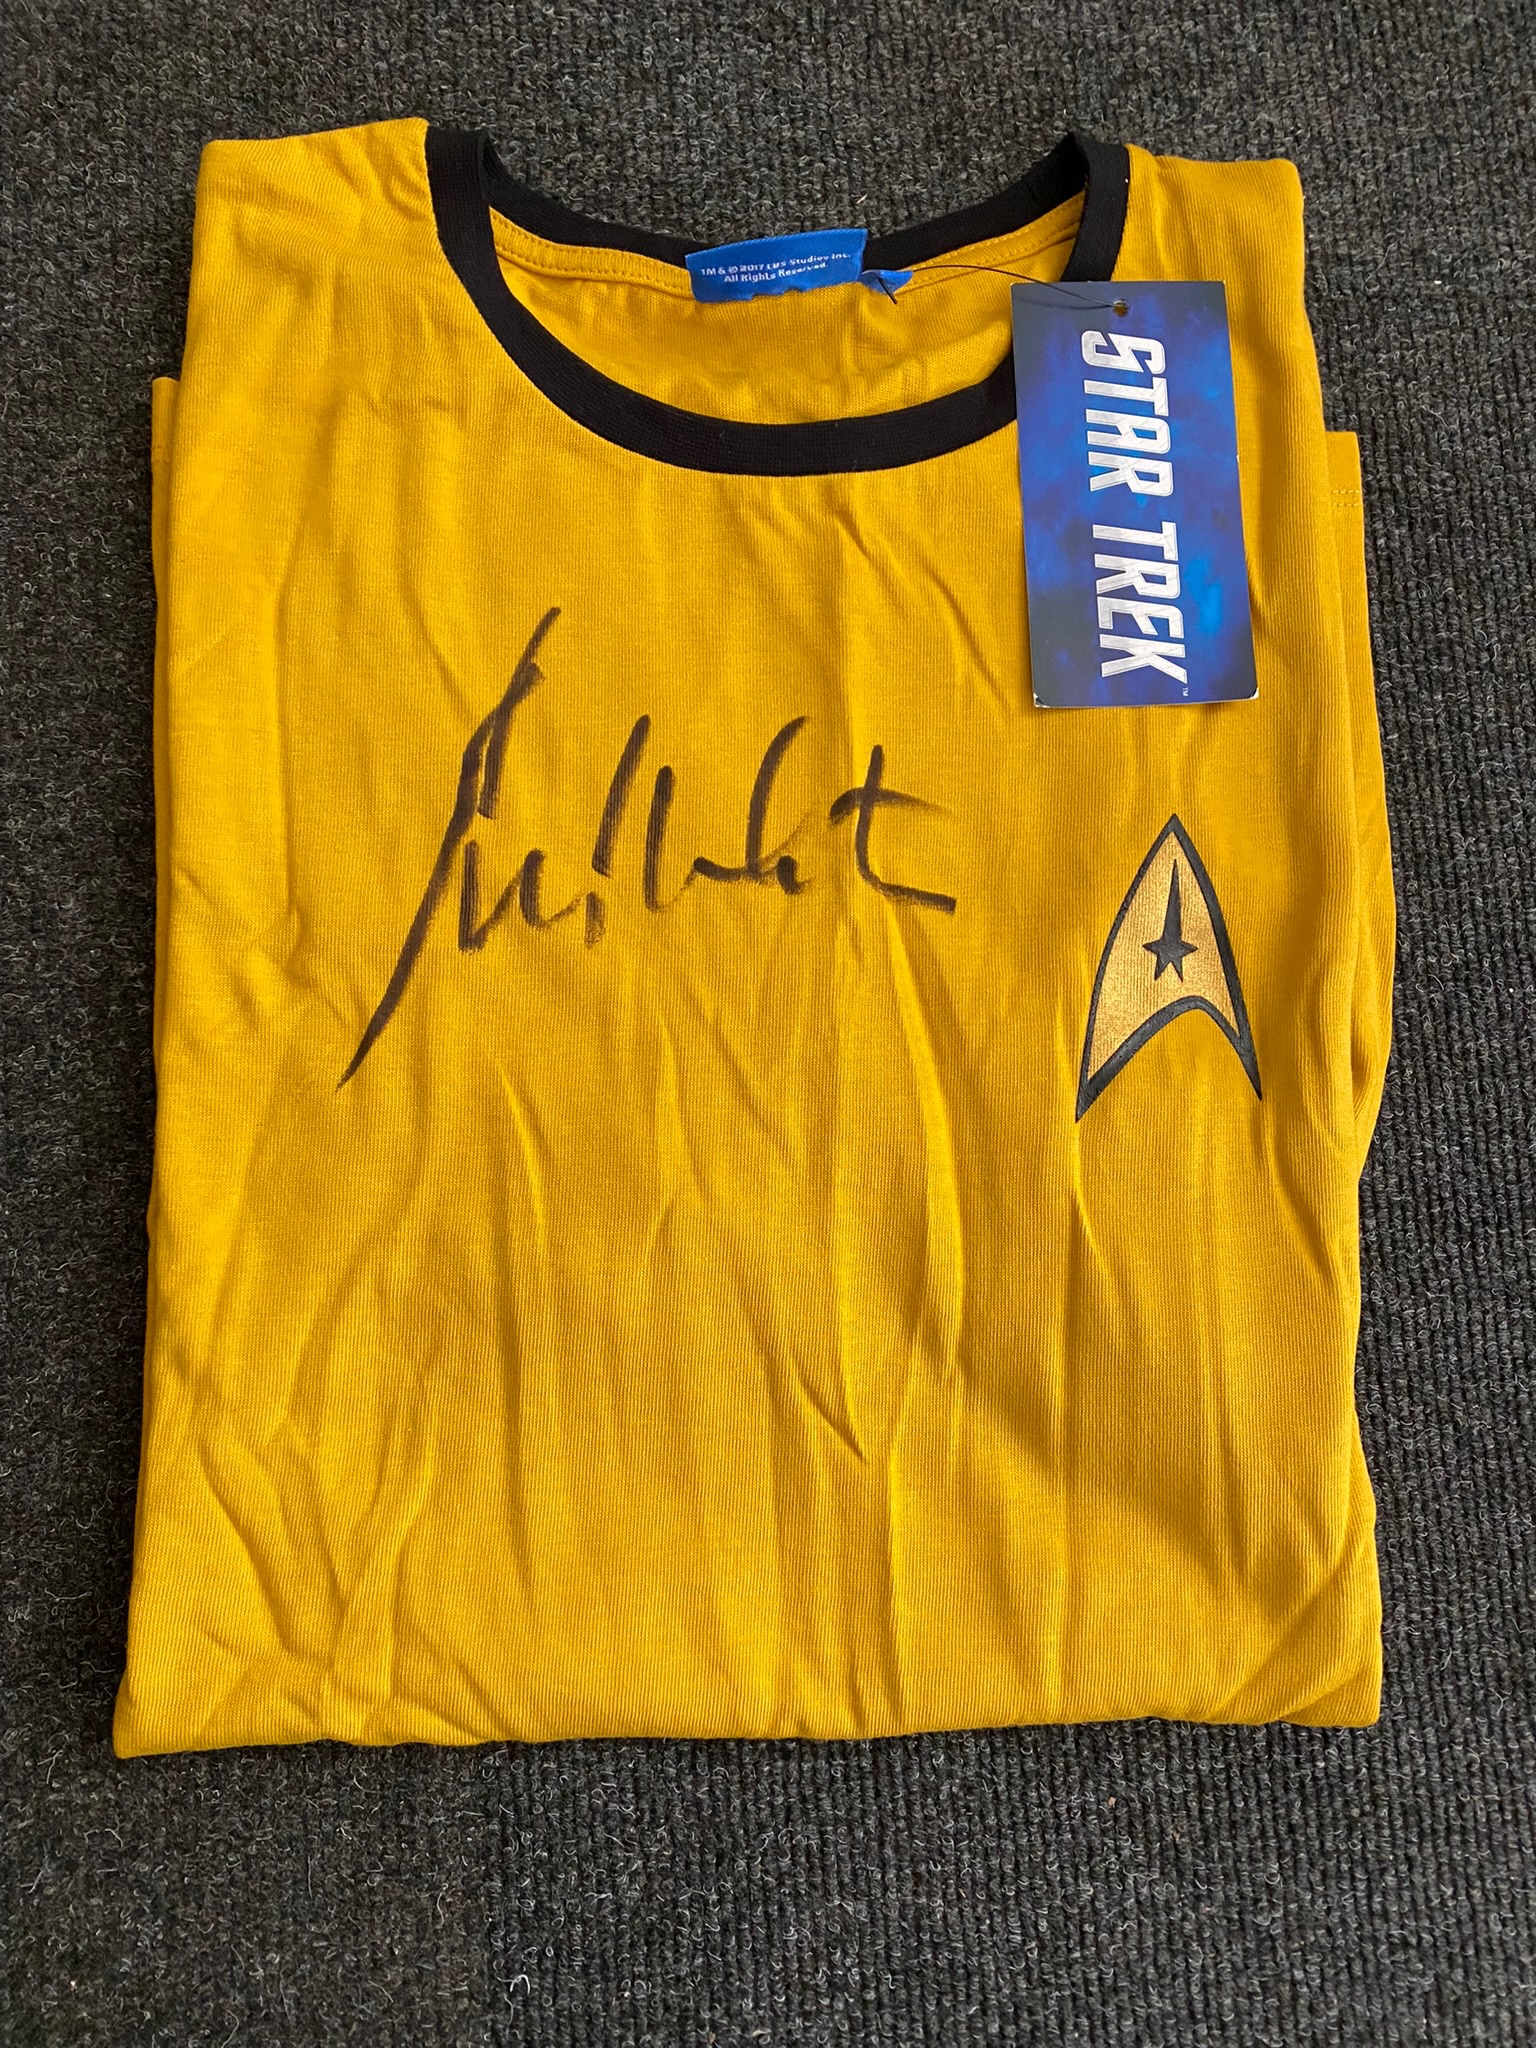 Star Trek Signed T-Shirt By William Shatner - Image 5 of 5